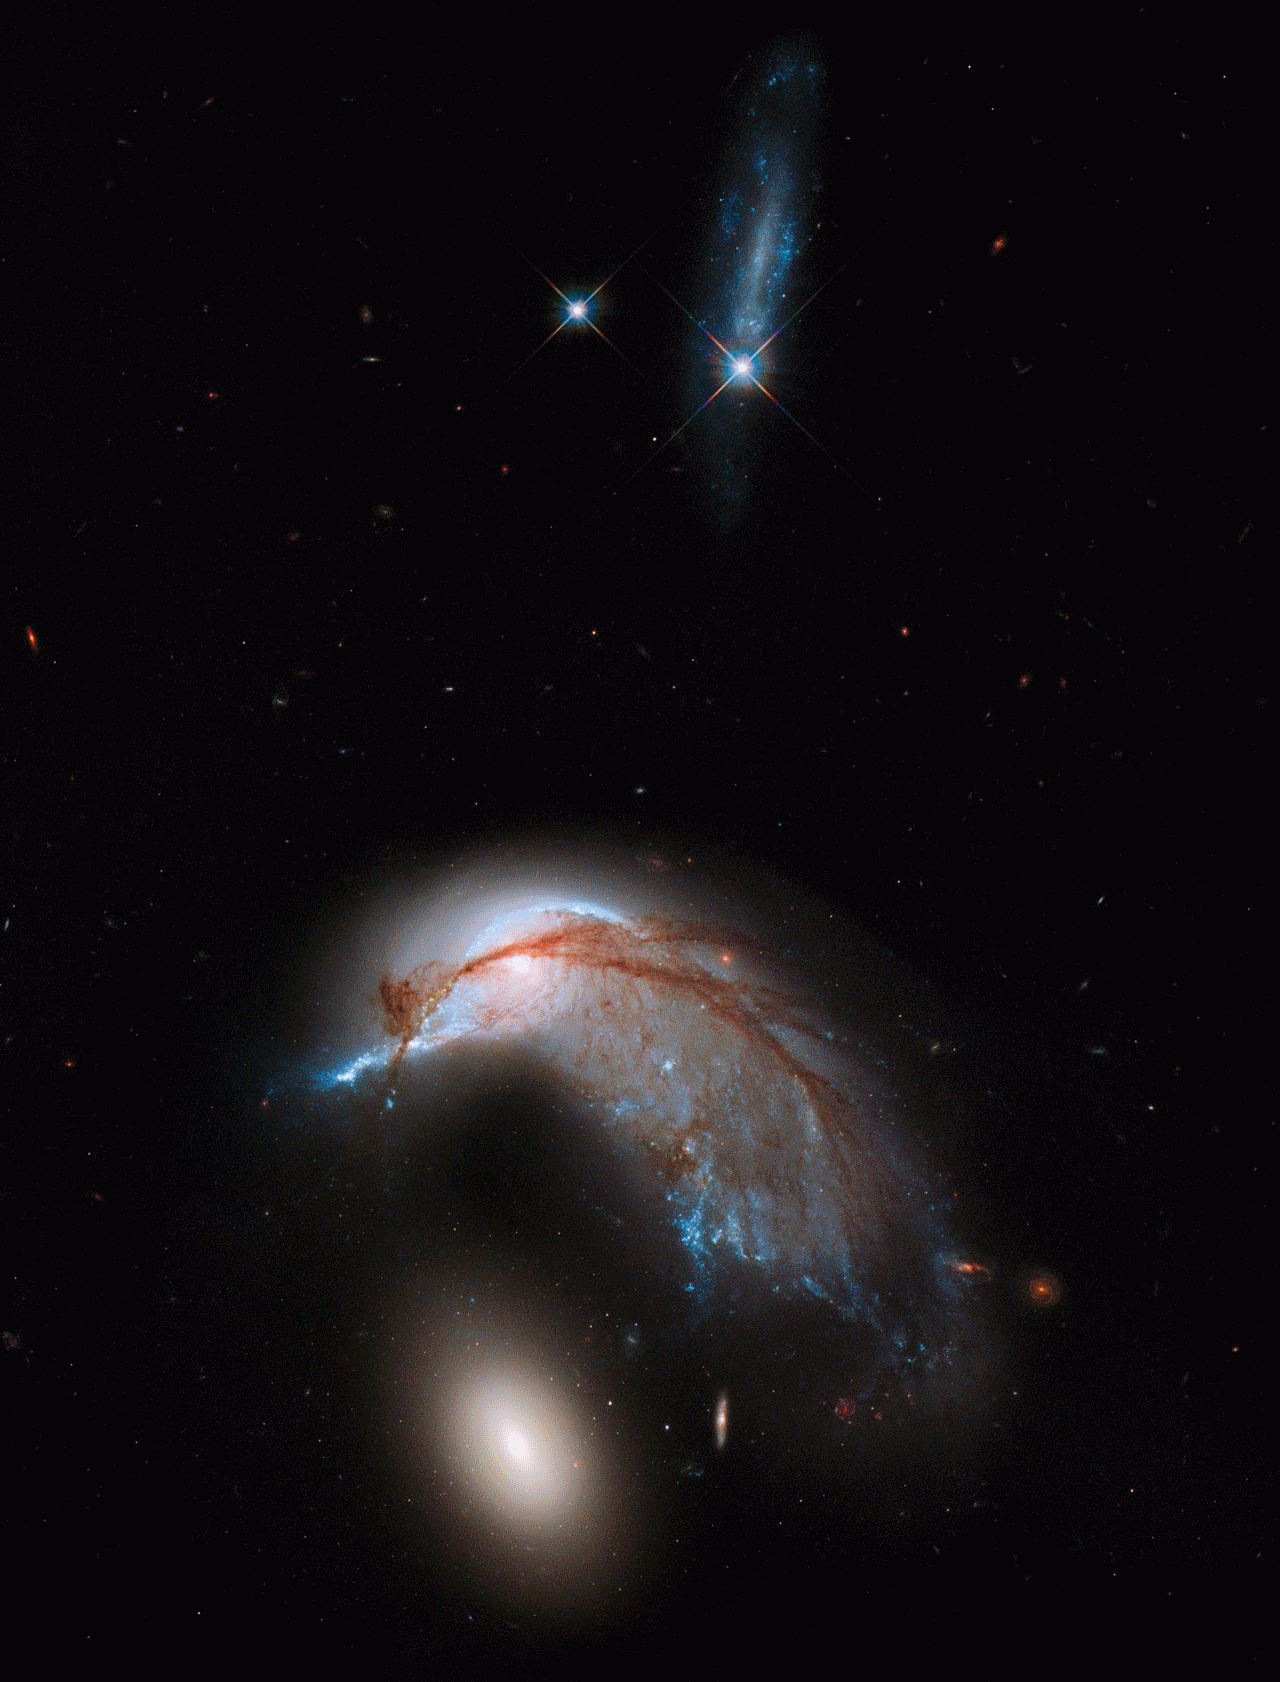 Image Caption - Credit: NASA, ESA and the Hubble Heritage Team (STScI/AURA)